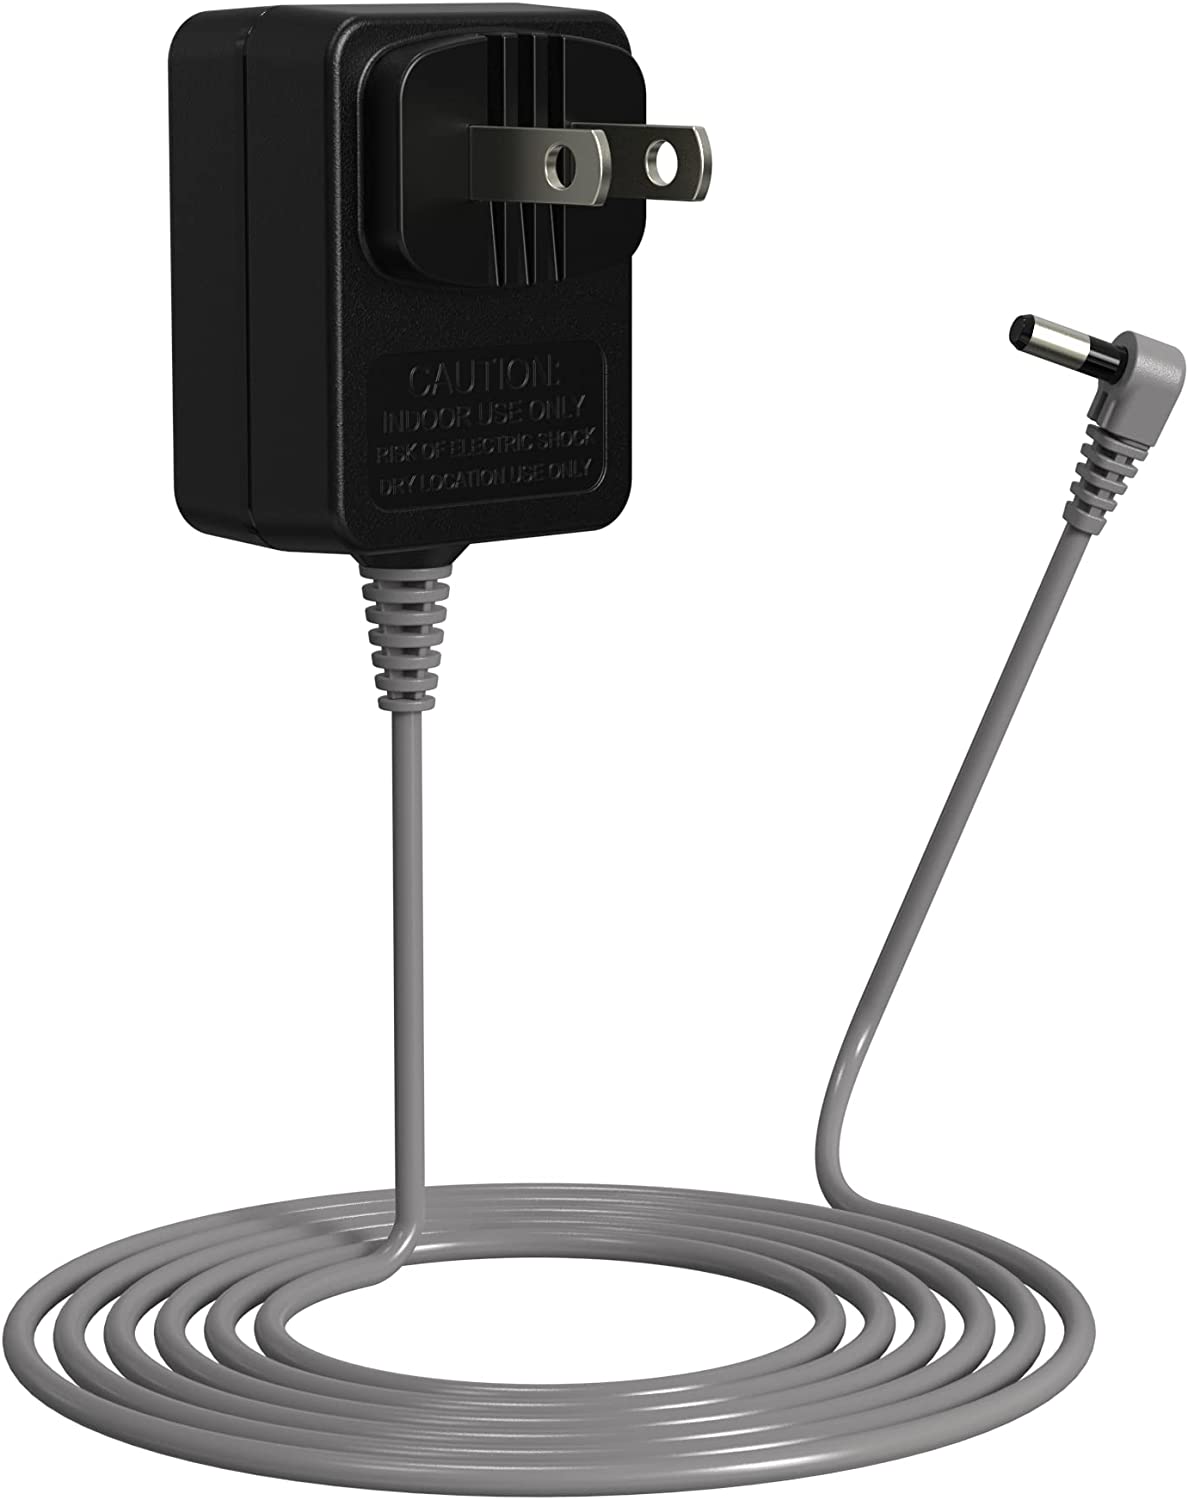 Panasonic Replacement AC Power Adapter Cord Charger for KX-TGF575S KX-TGE233B KX-TGF352N KX-TGE475S Cordless Phone